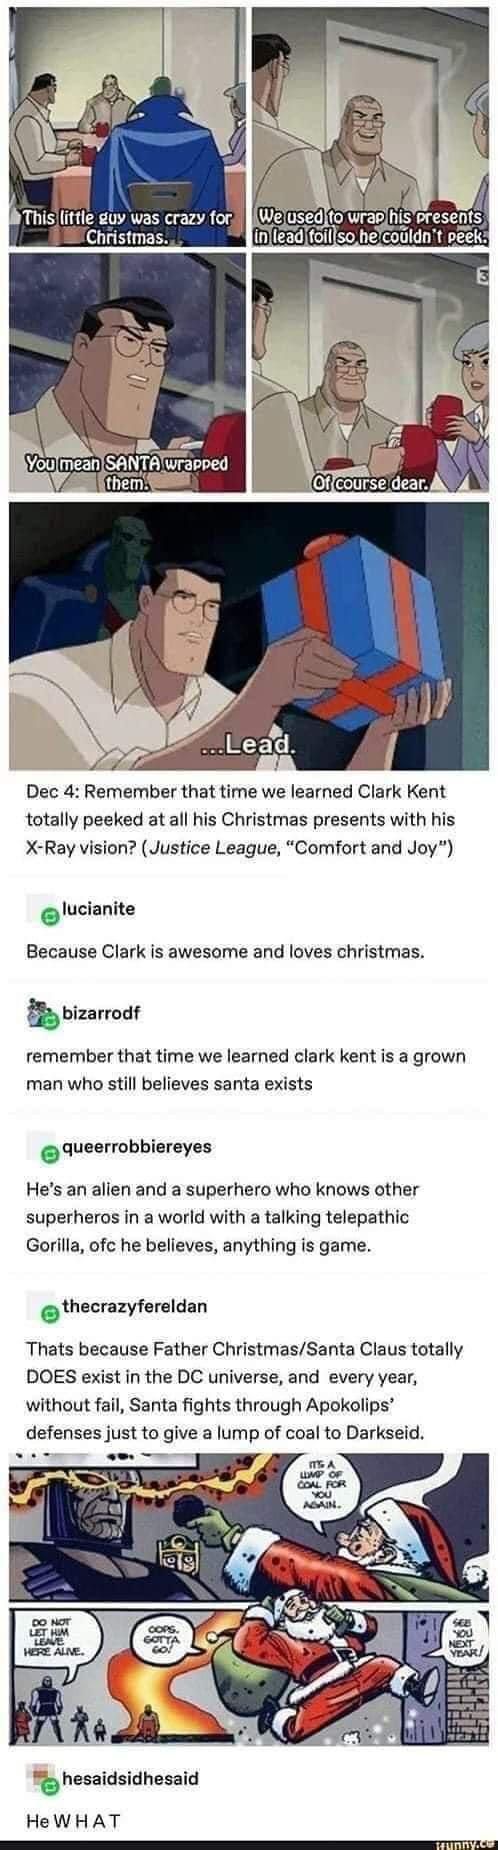 Even Superman loves Christmas!